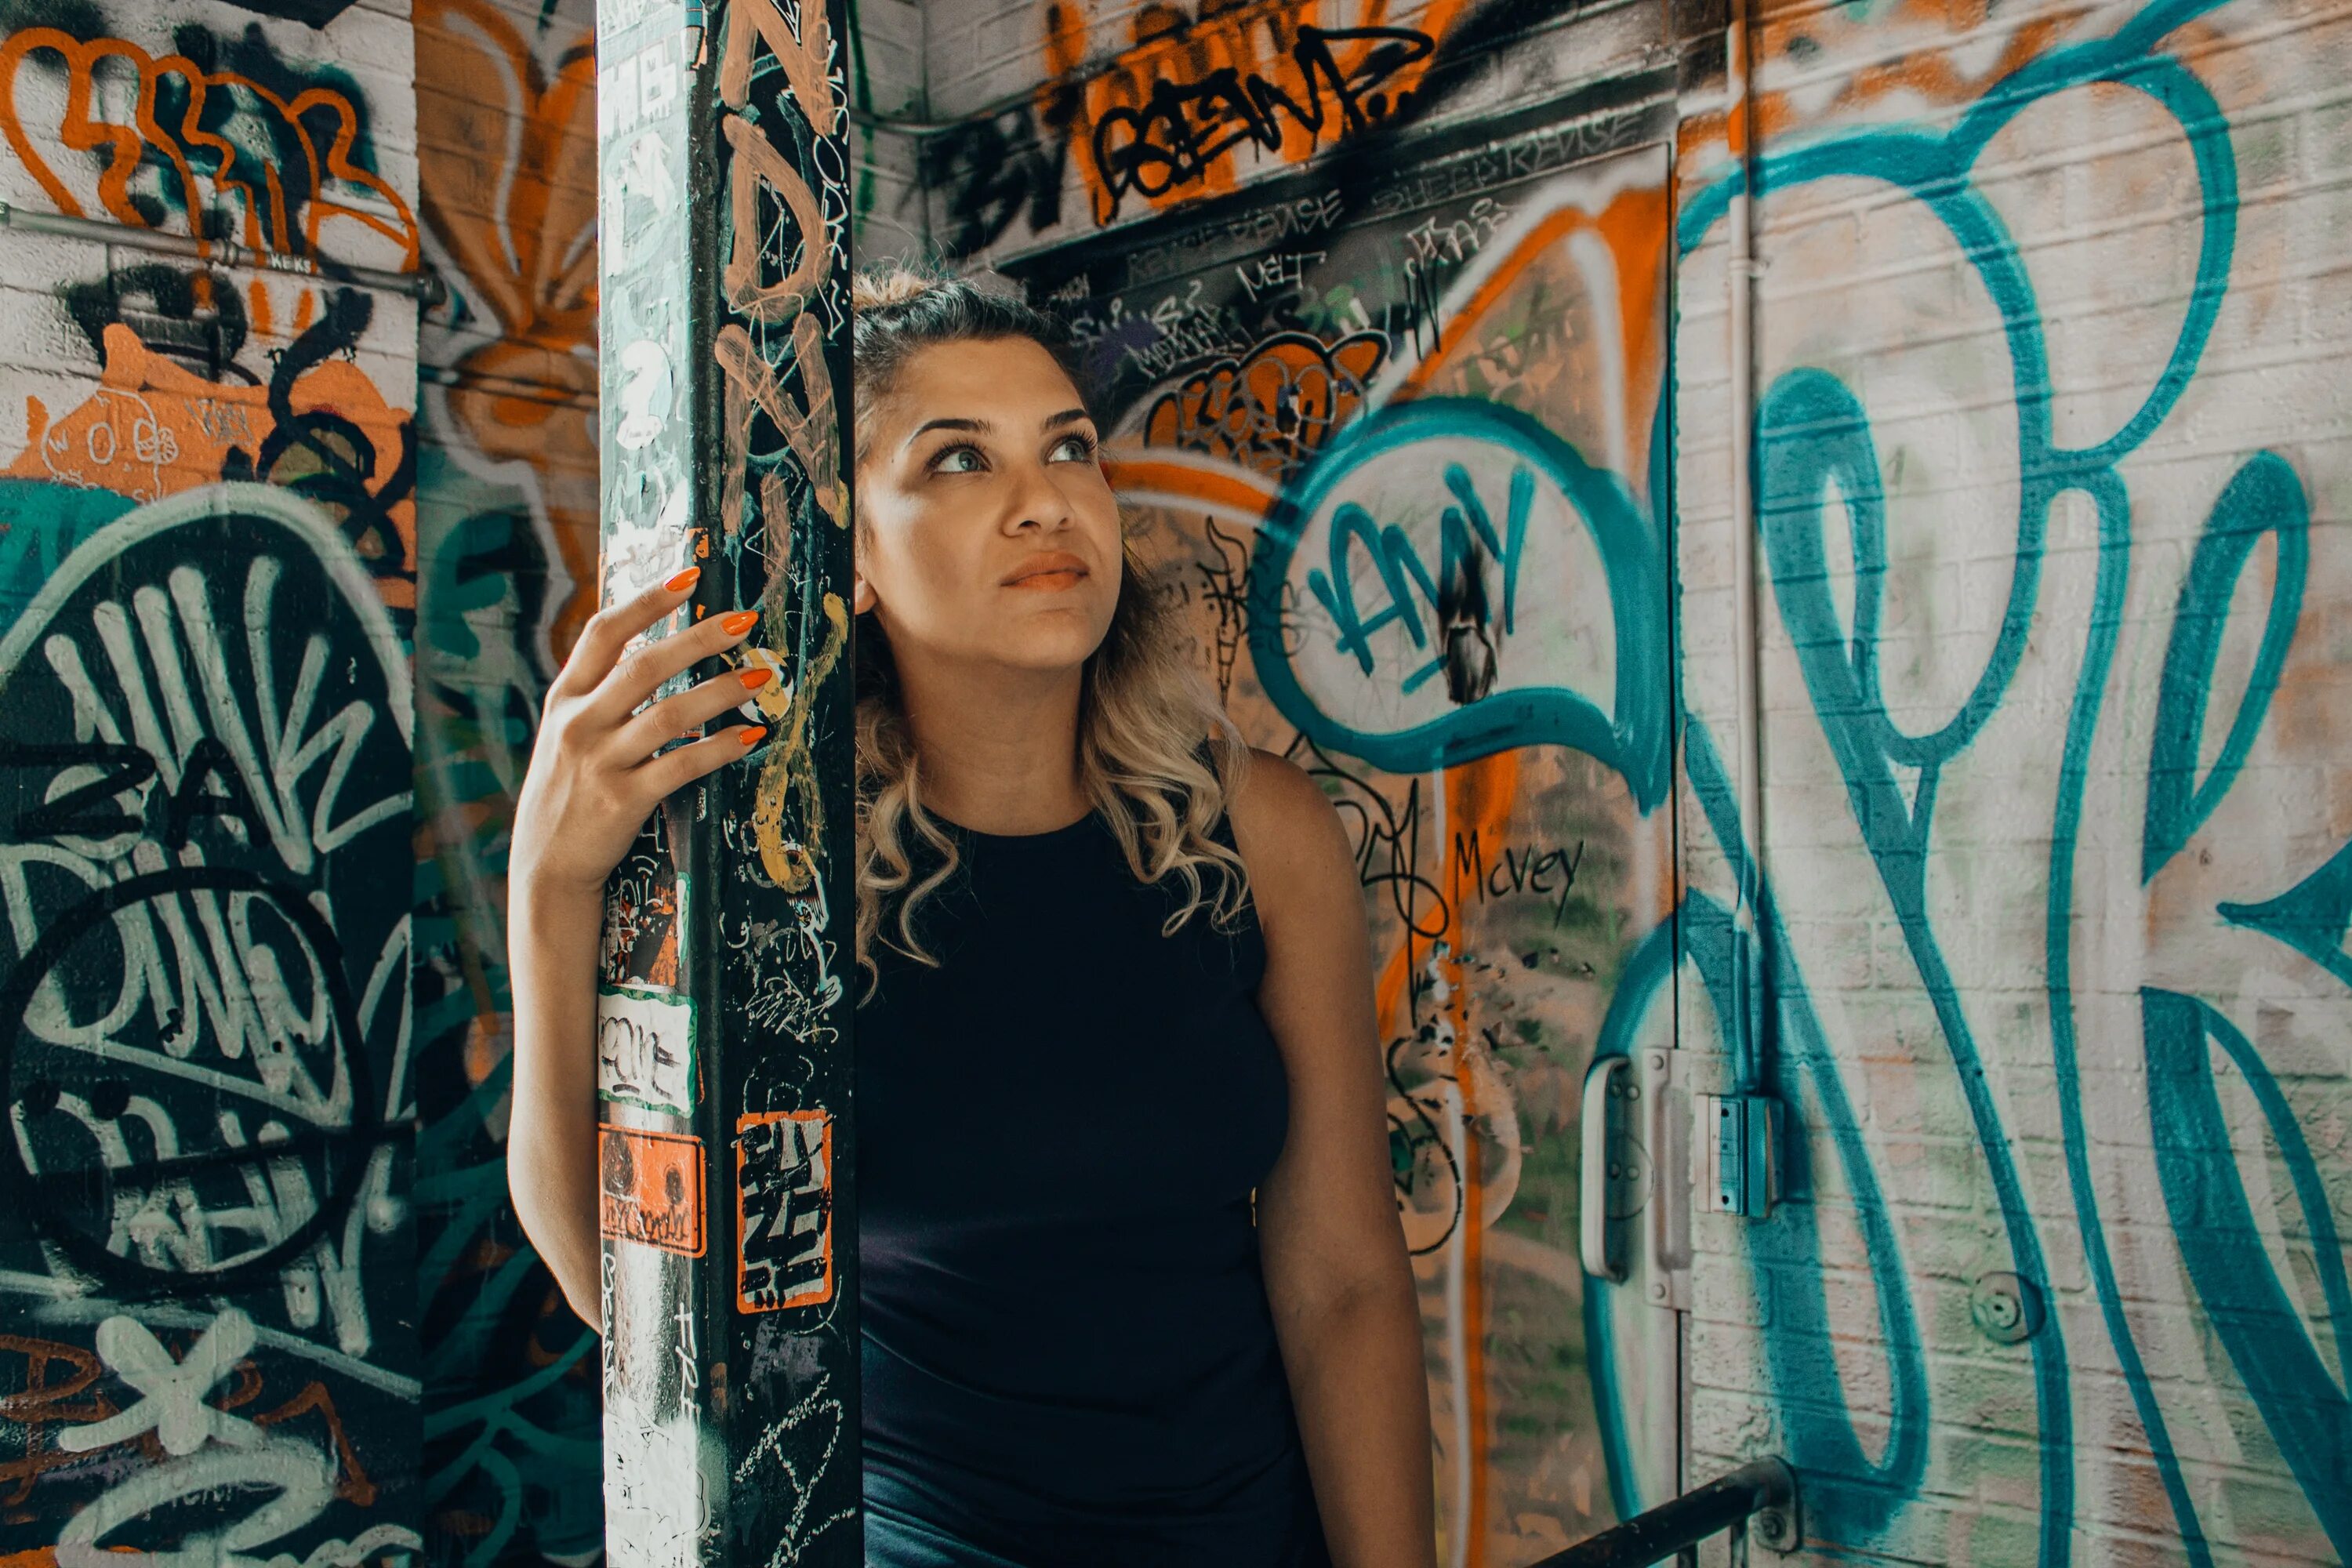 Граффити девушка. Девушка на фоне граффити. Фотосессия у стены с граффити. Фотосъемка в стиле стрит арт.